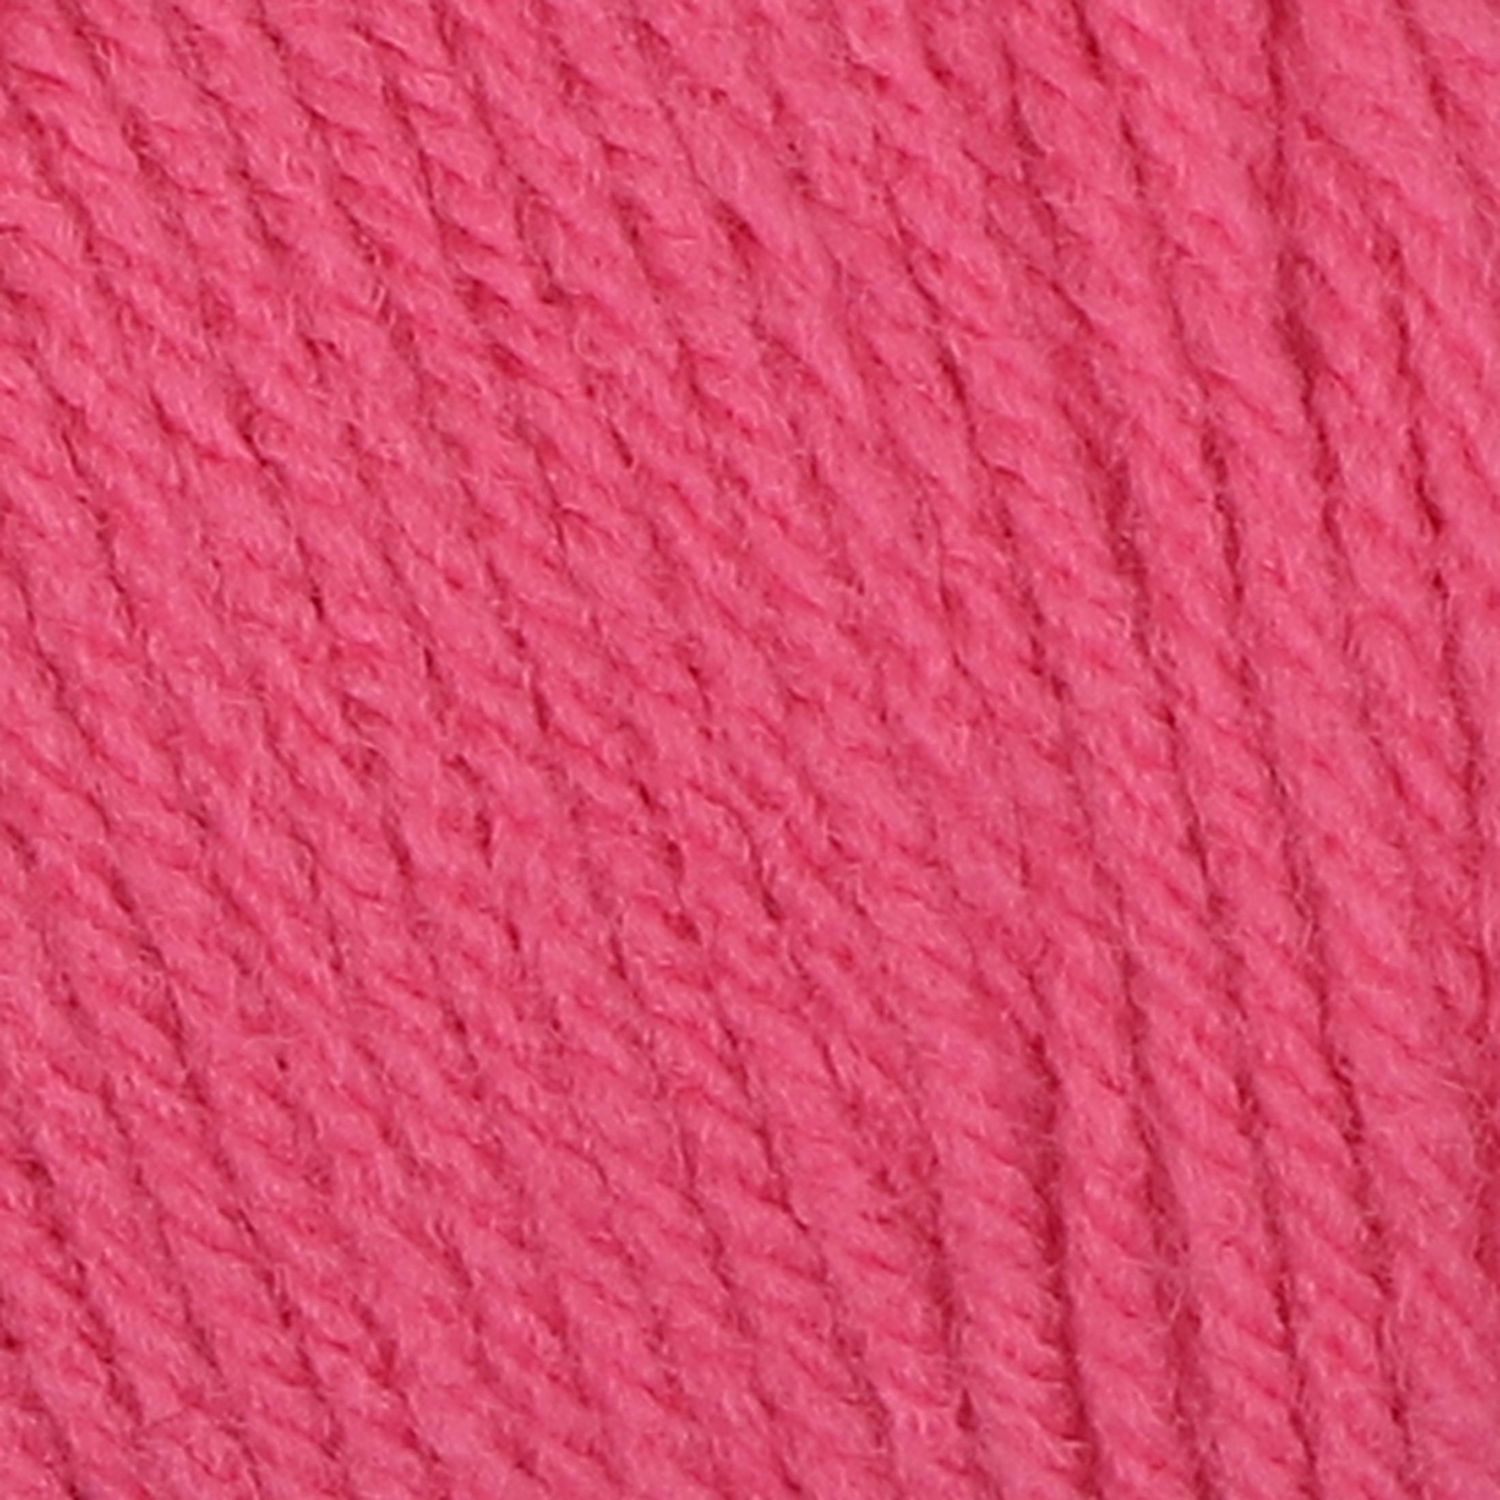 Mainstays Medium Acrylic Pink Yarn, 7 Oz 397 Yards